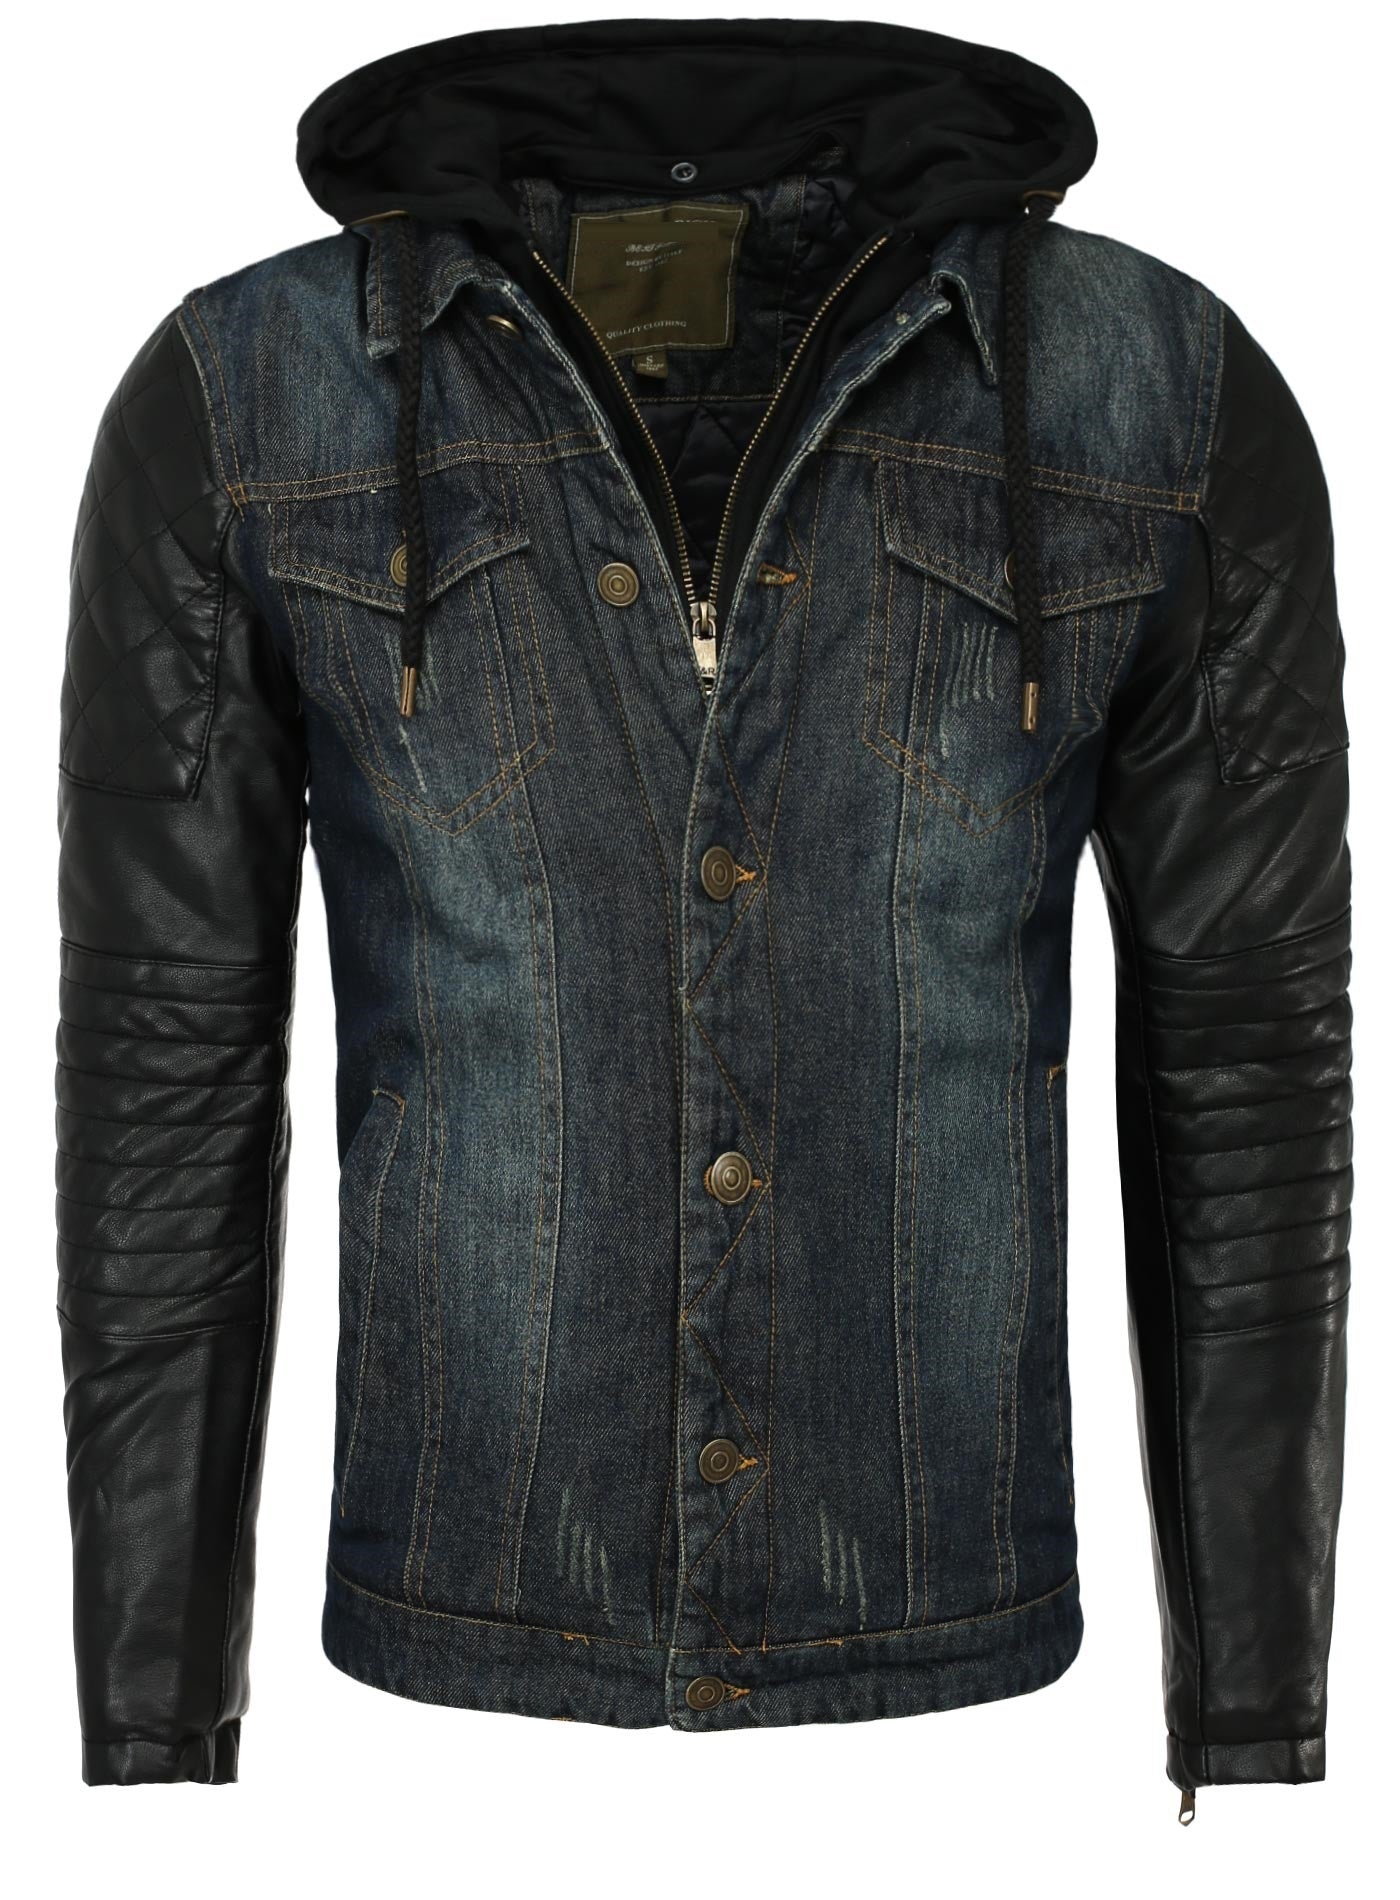 Hooded Denim Jacket | Jackets men fashion, Hooded denim jacket, Mens jackets